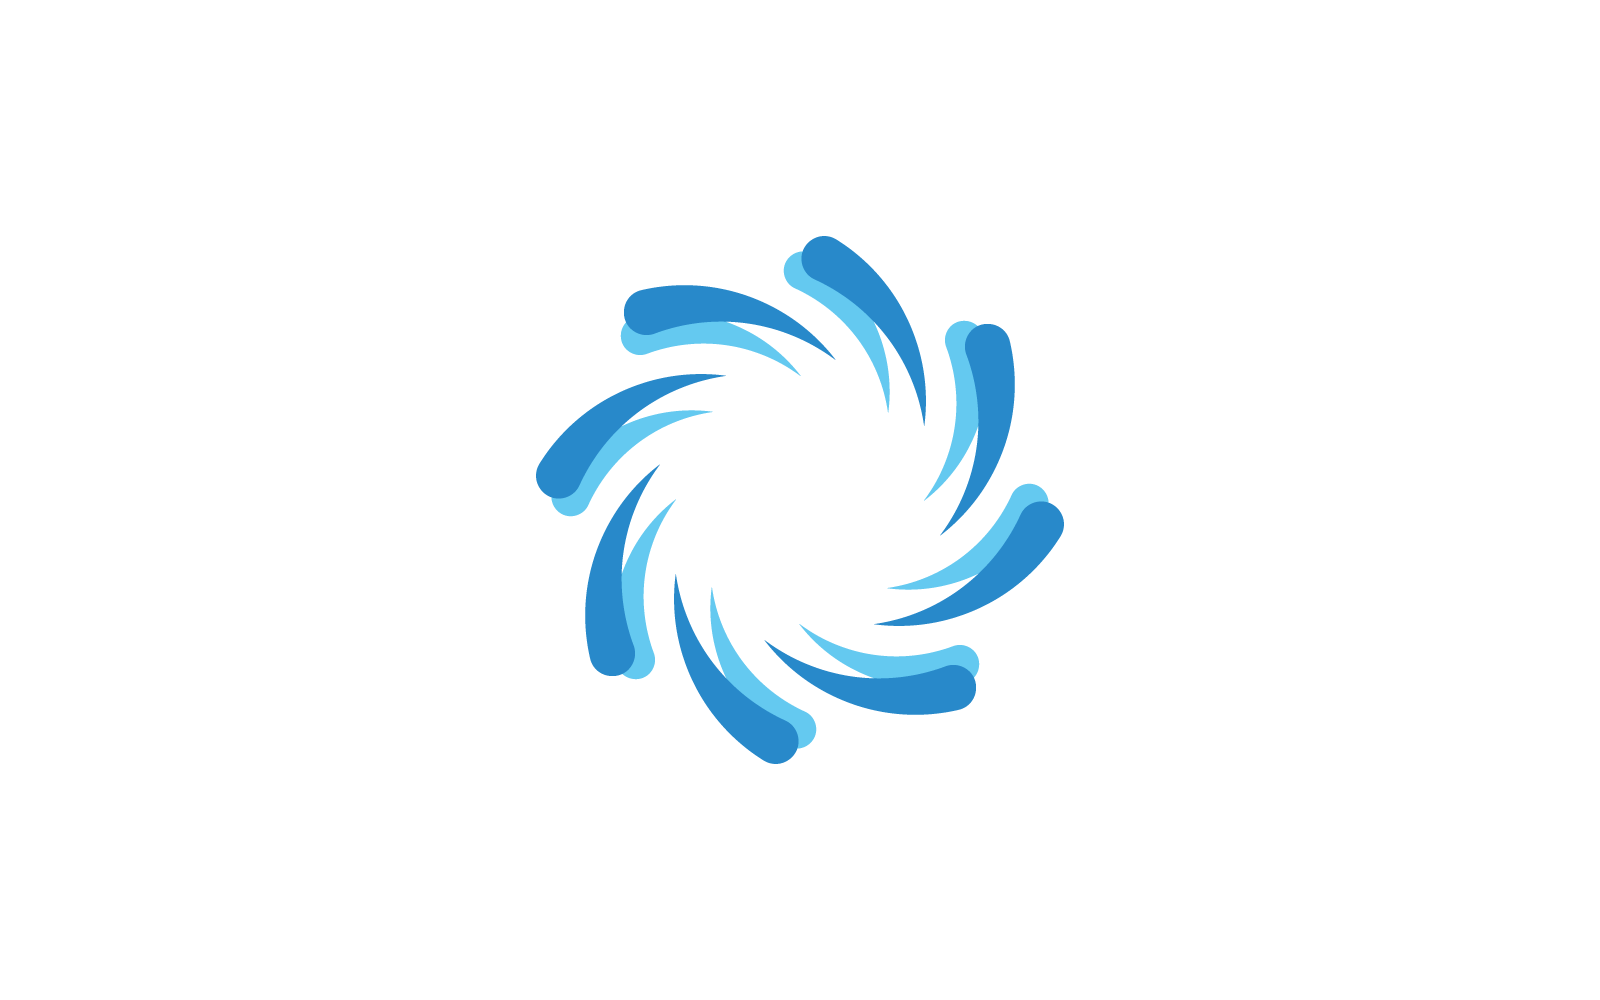 Business logo, vortex, wave and spiral design icon Logo Template